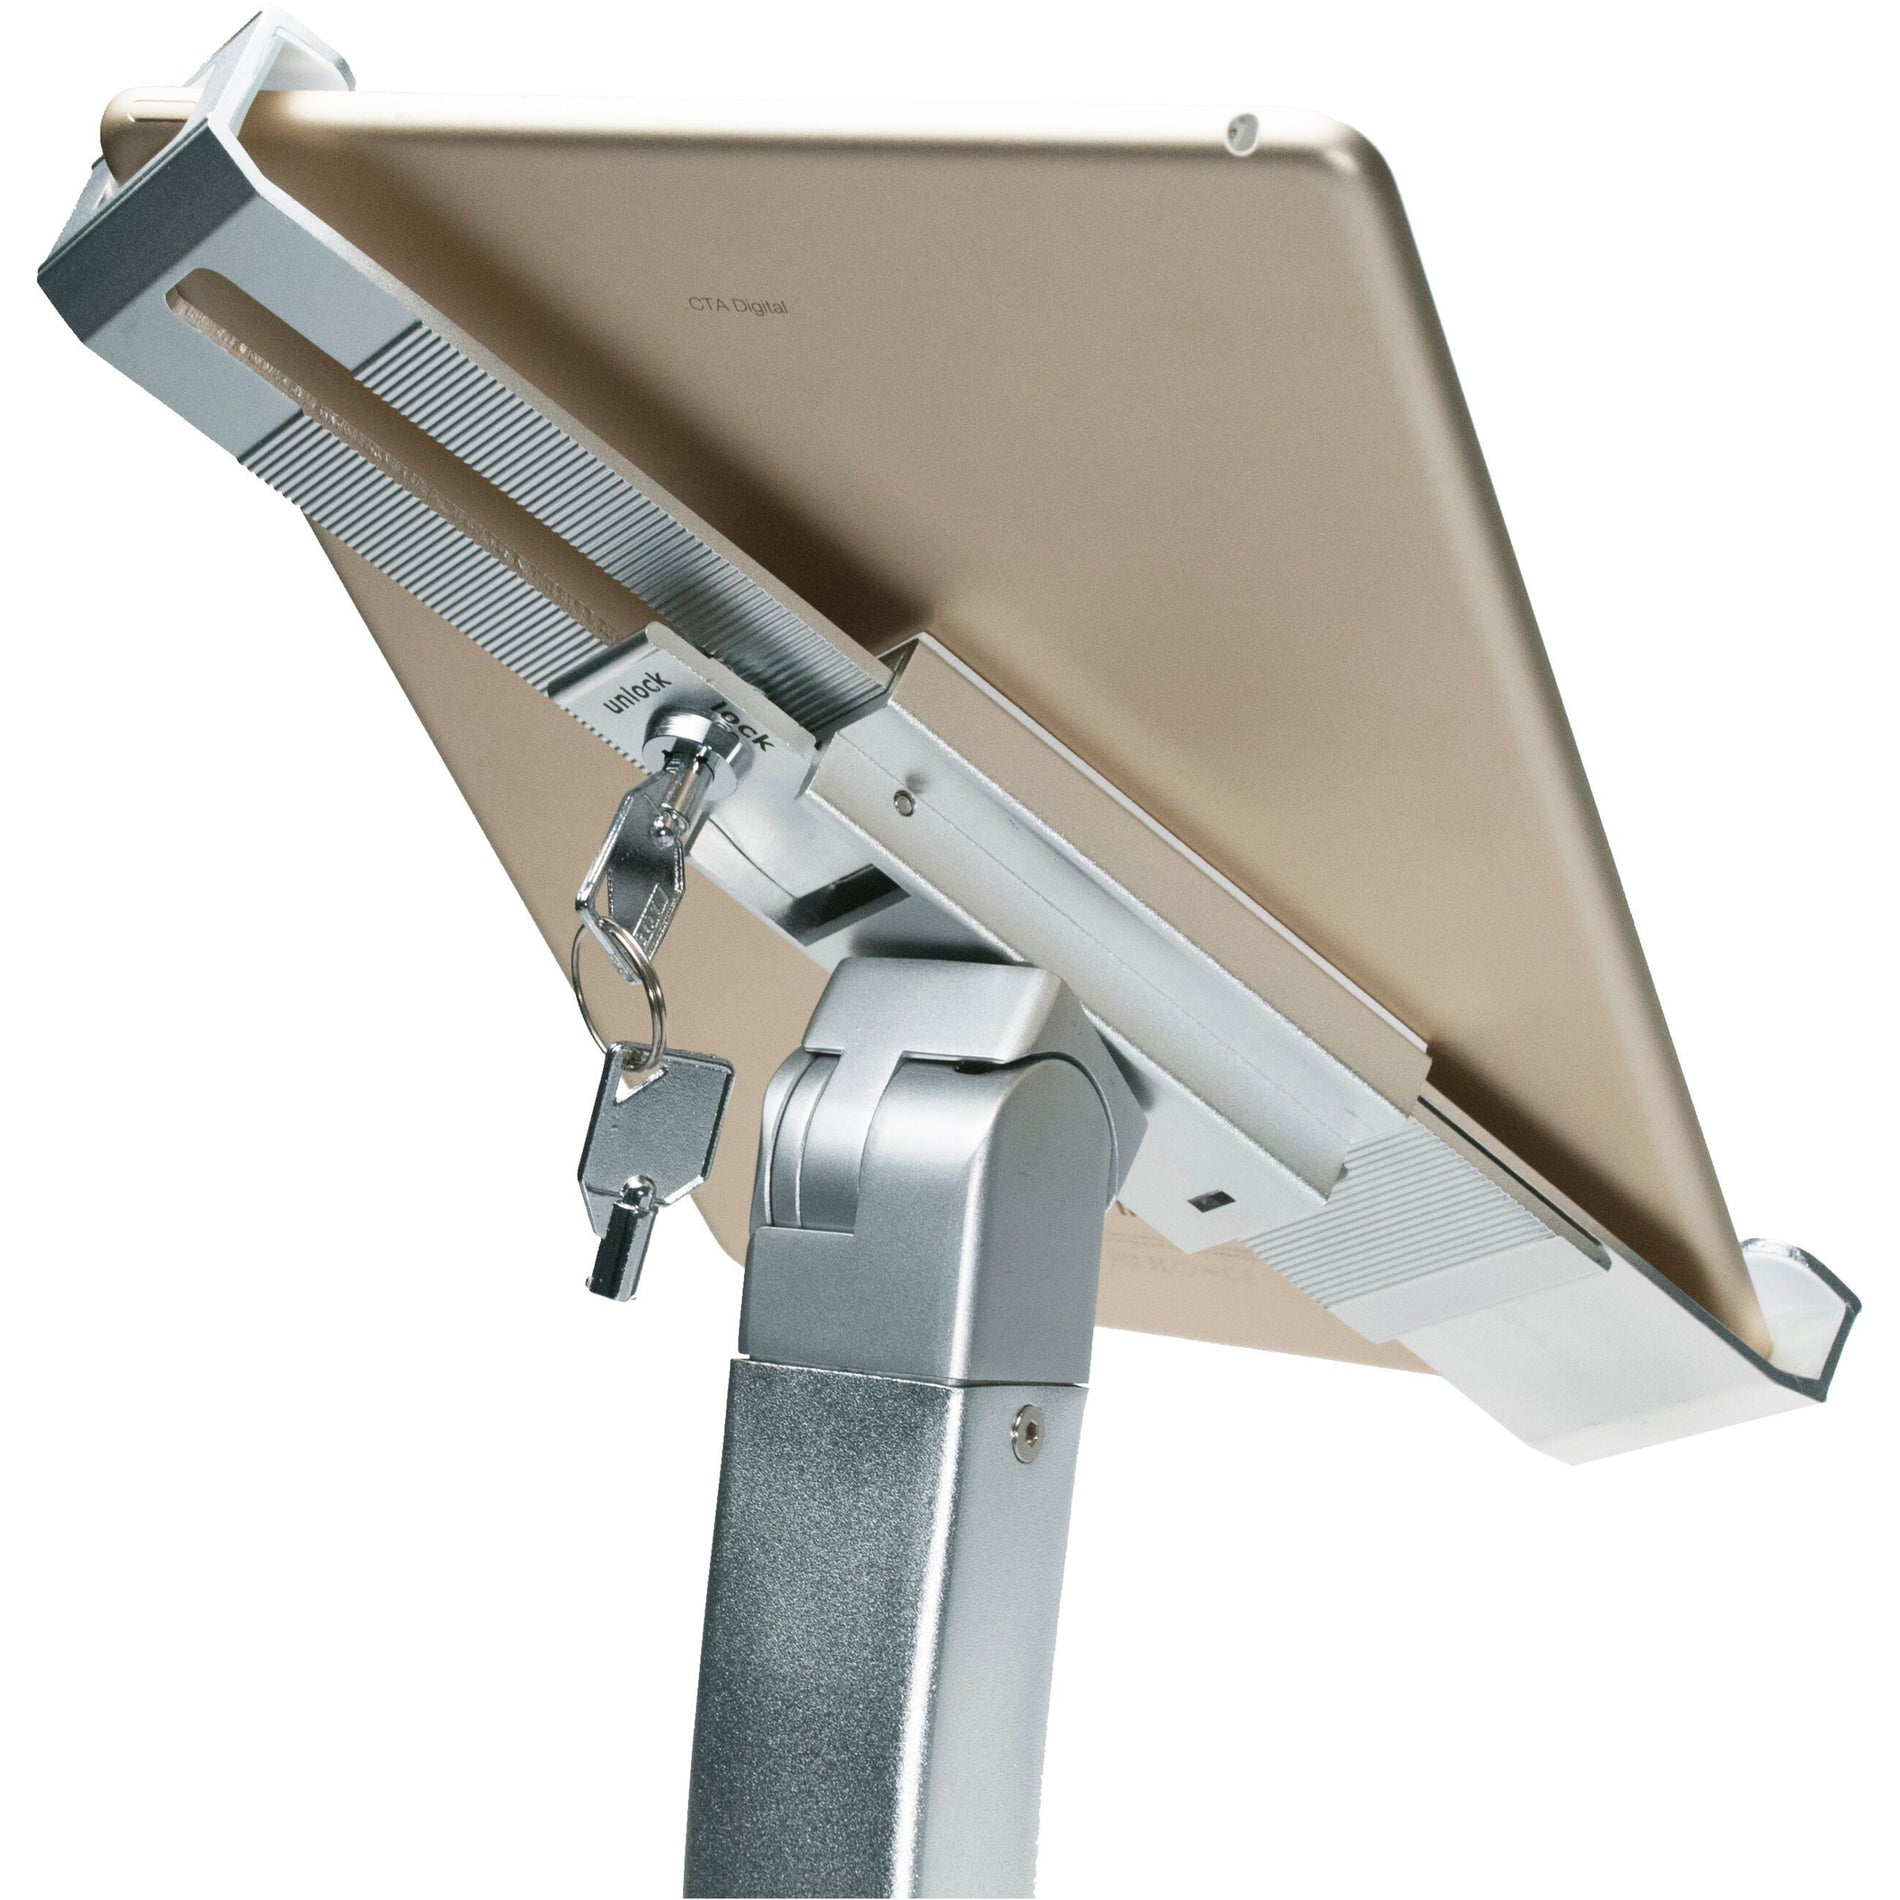 CTA Digital PAD-SWM Wall Mount for 7-13in Tablets, Security Lock, Tilt, 360° Rotation